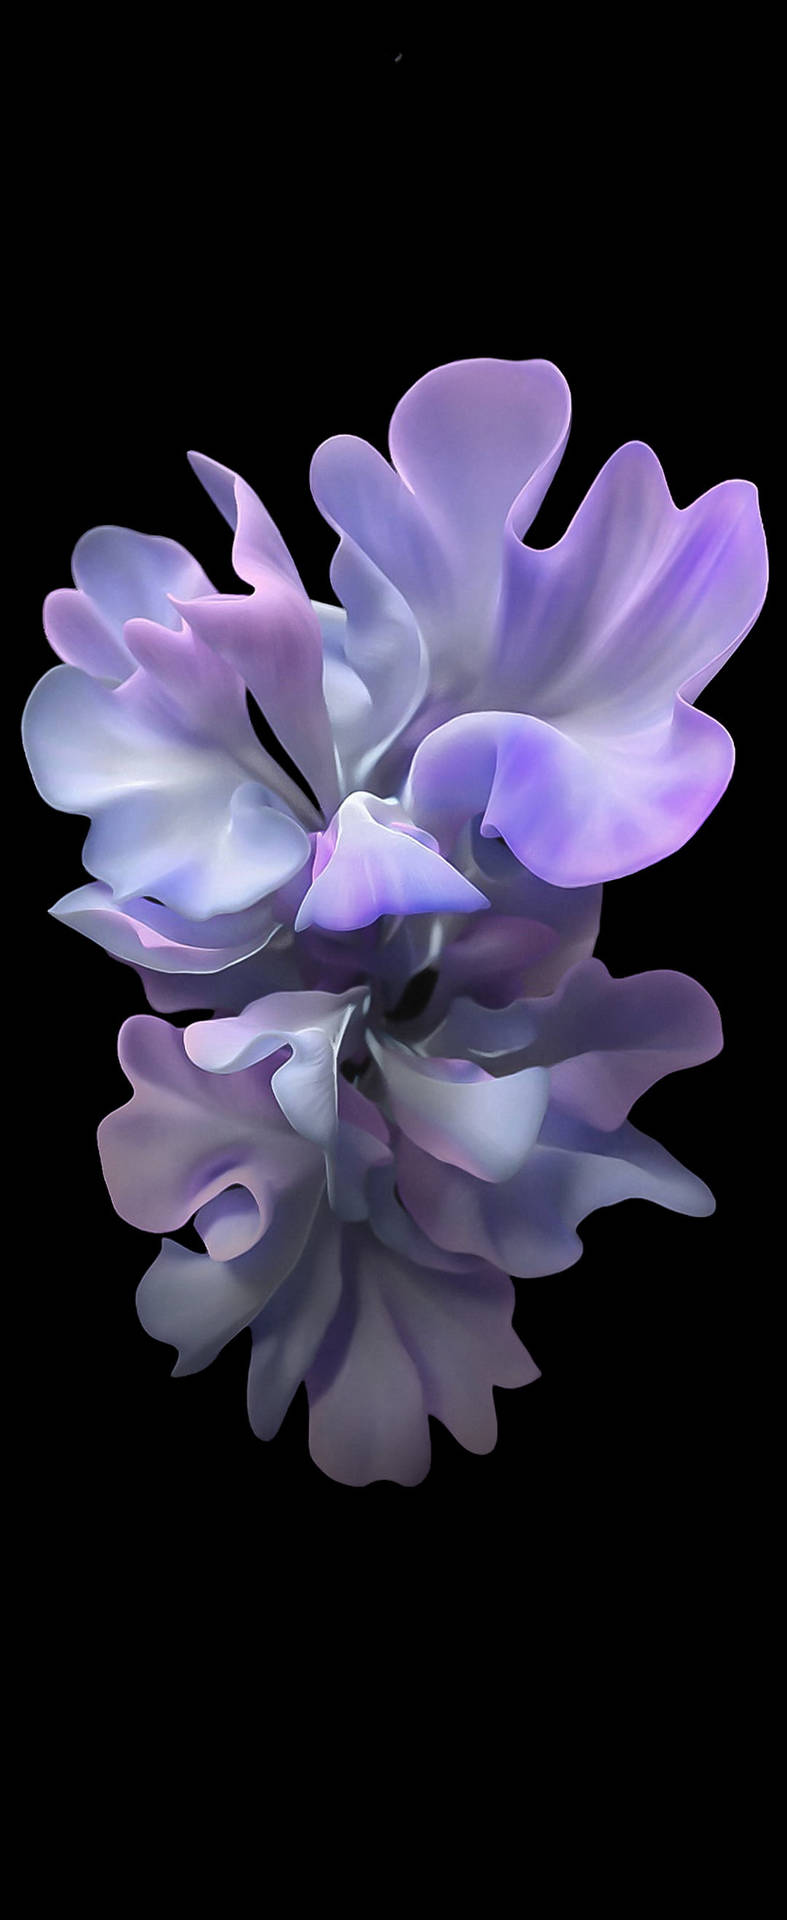 Violet Flower Art For Samsung S20 Fe Picture